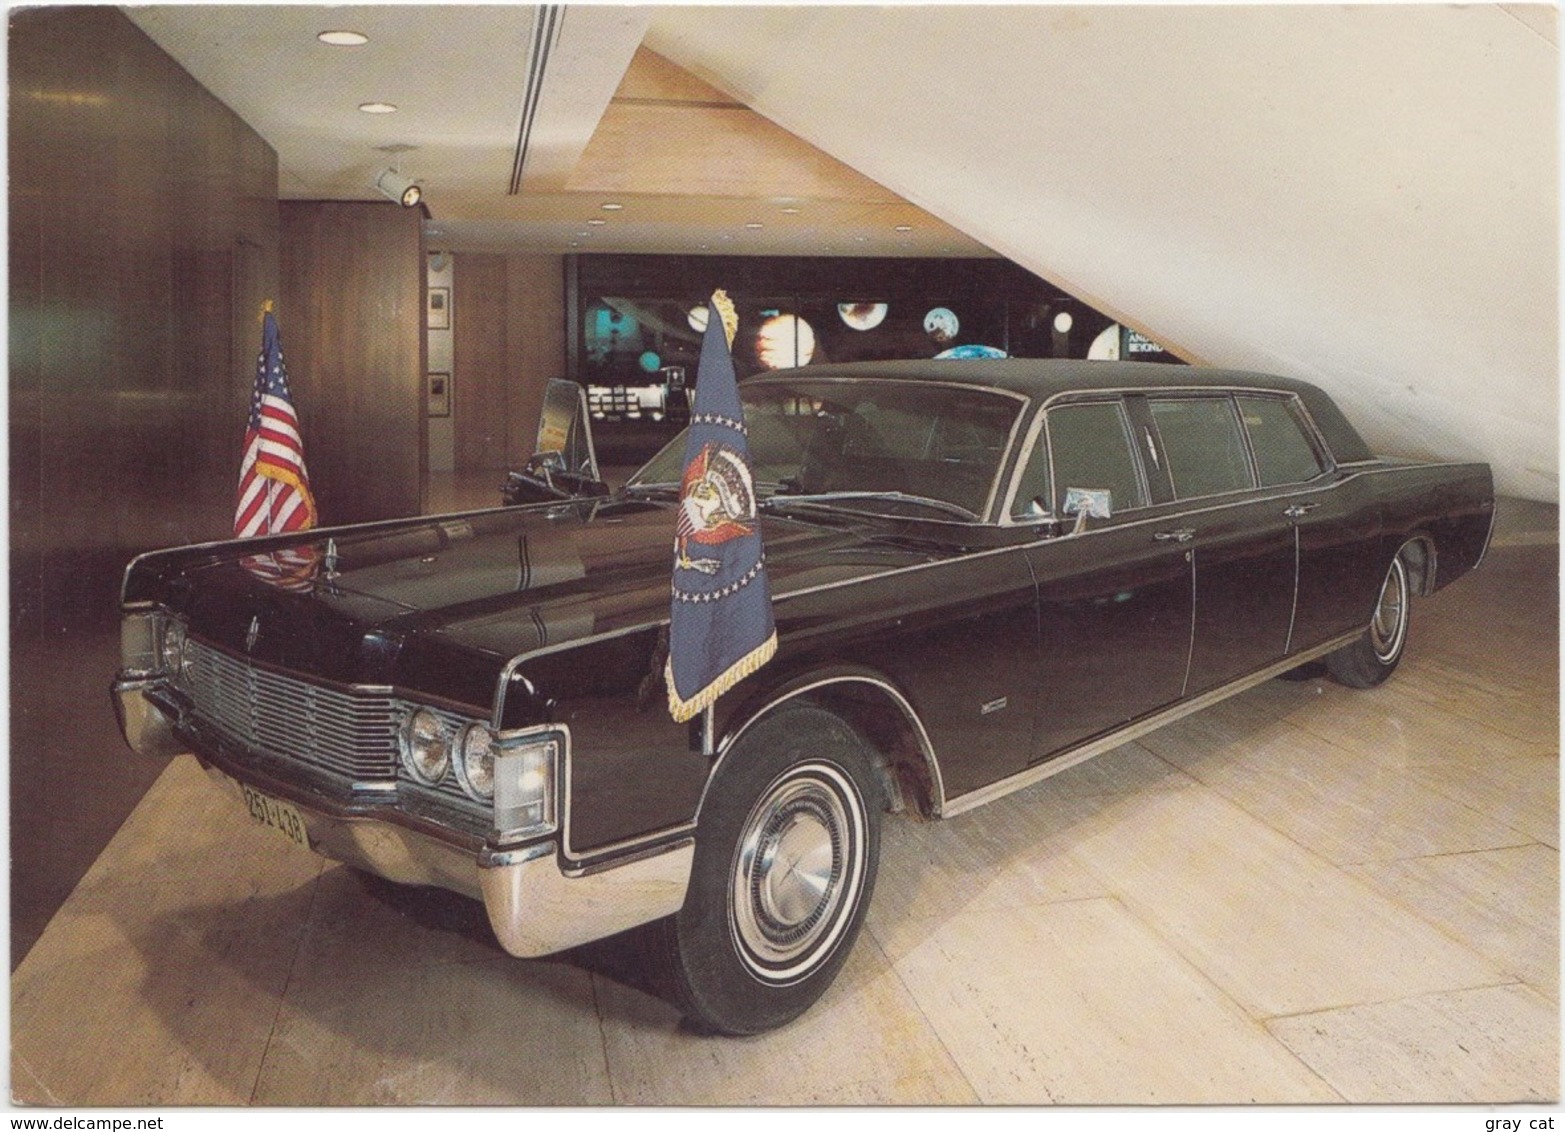 Presidential  Limousine, 1968 Stretch Lincoln Ford, Lyndon Johnson Museum, Unused Postcard [20971] - Presidenten